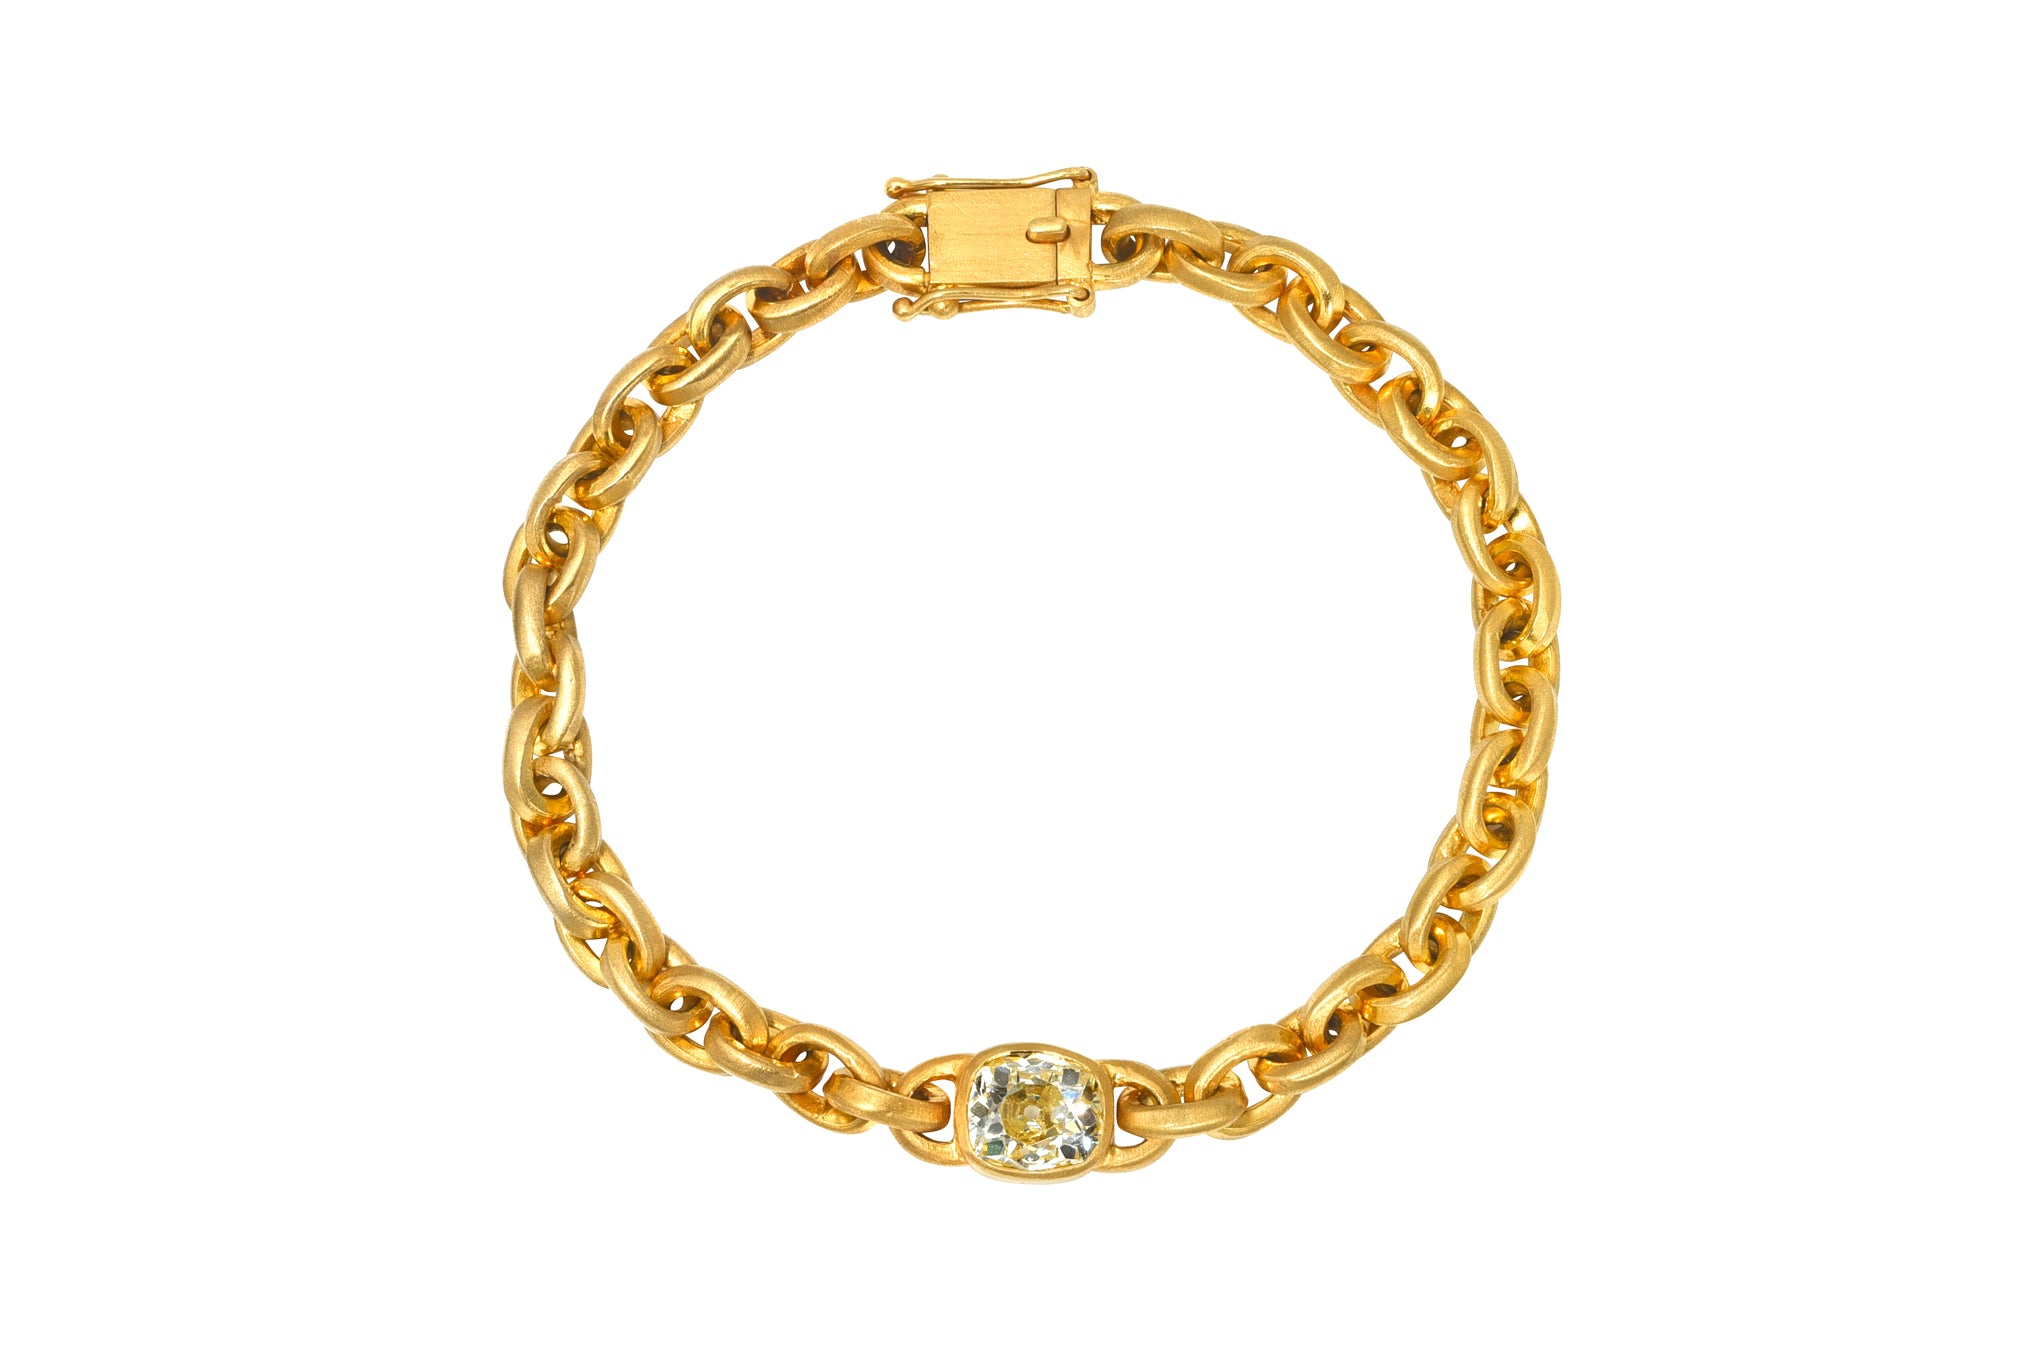 Darius Jewels old mine cut oversized diamond signature chain bracelet one of a kind Fairmined yellow gold 